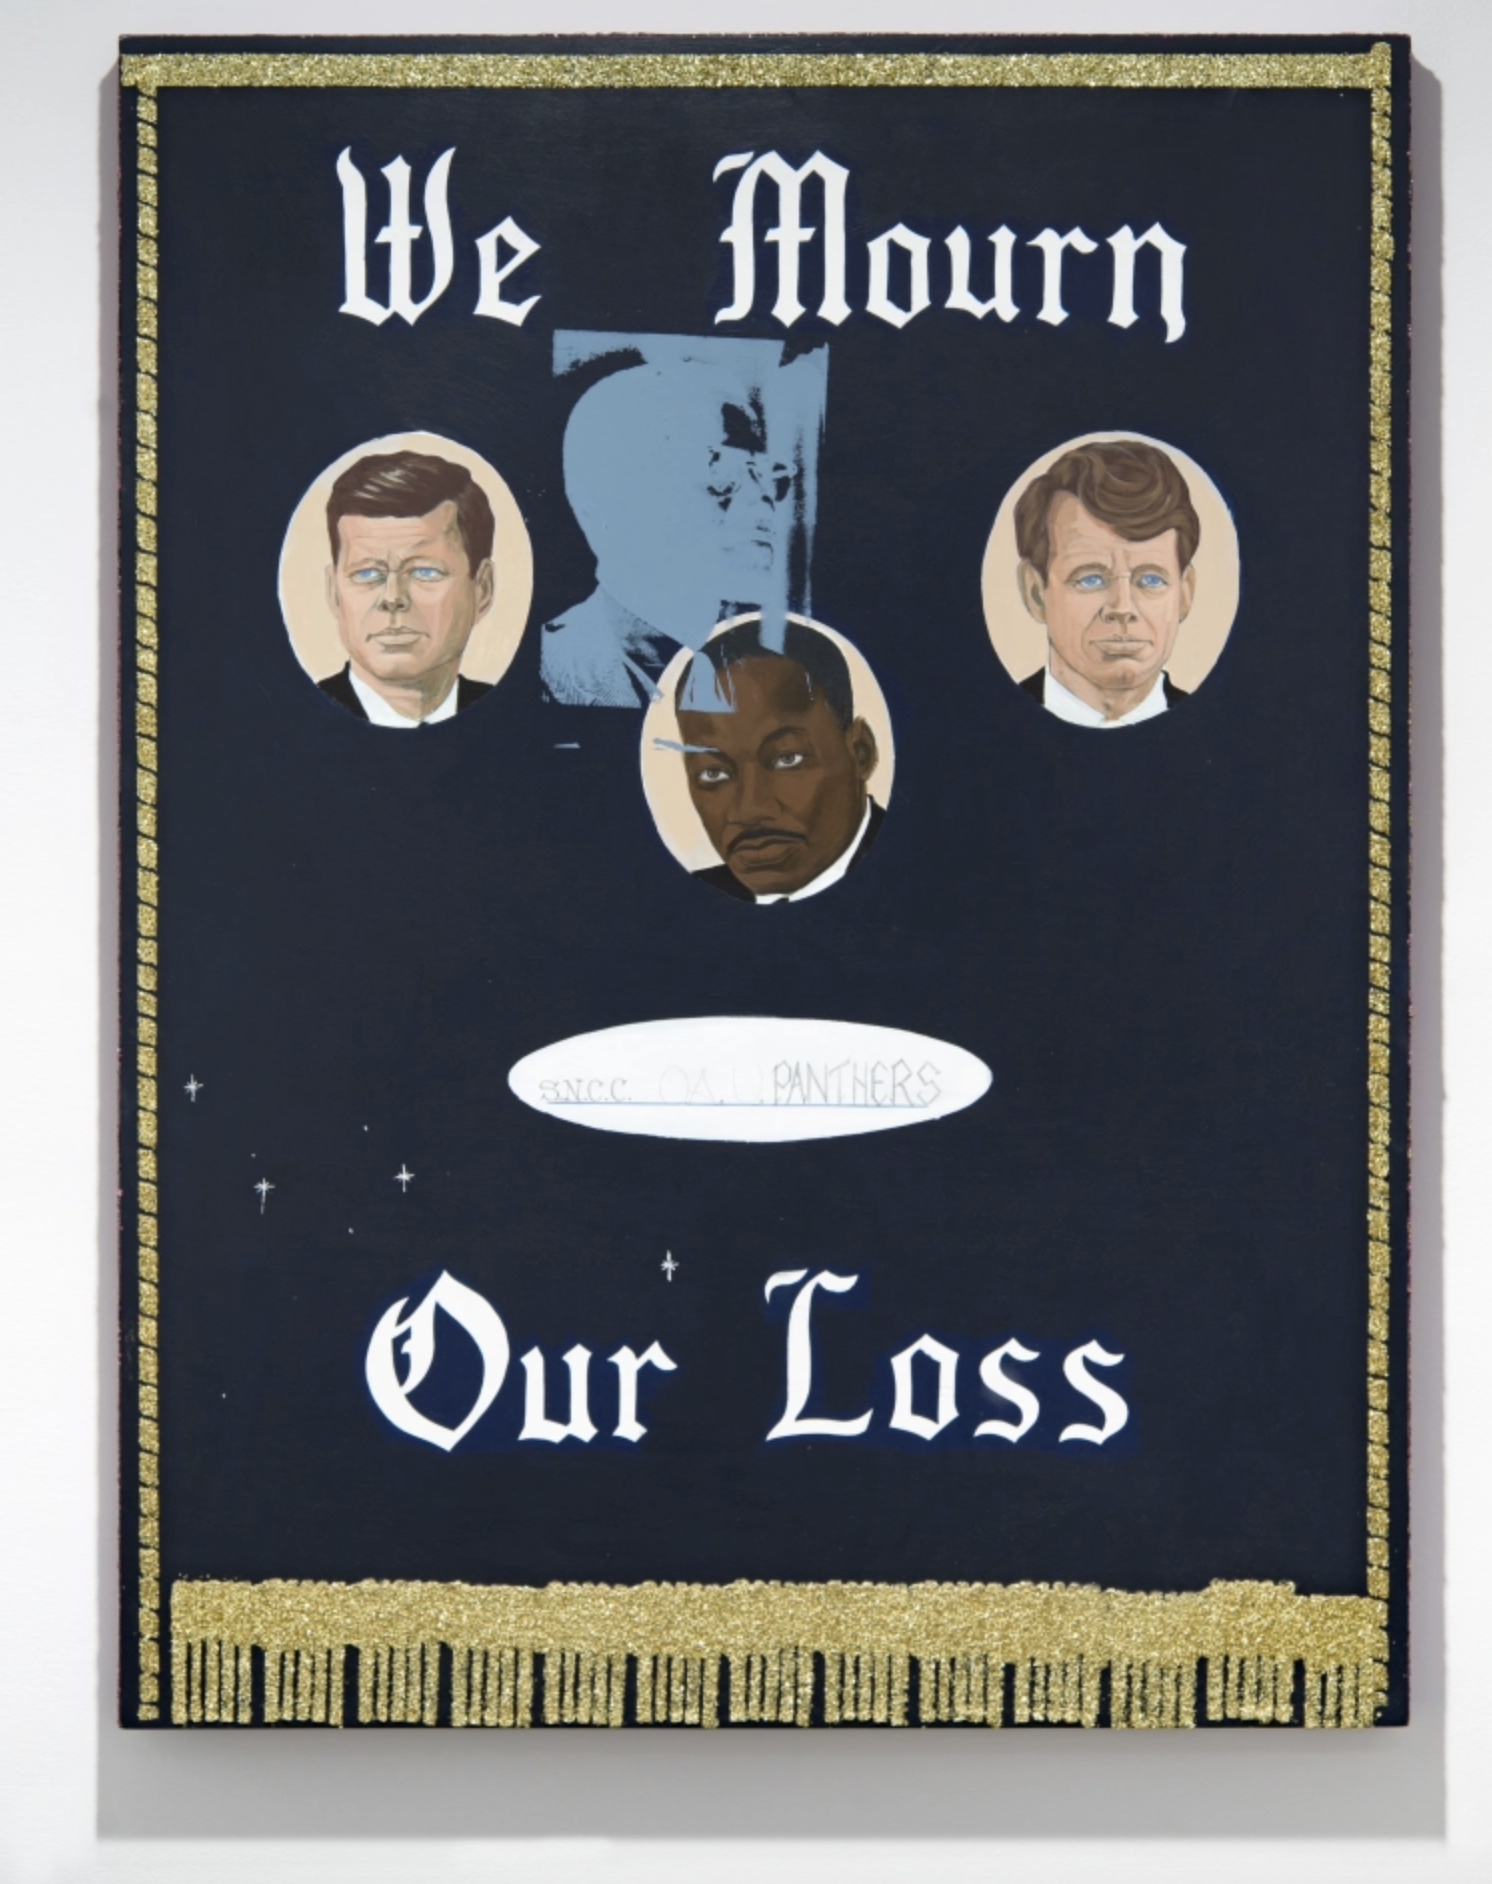 "We Mourn Our Loss #2", obra de Kerry James Marshall que vendió la galería Jack Shainman.